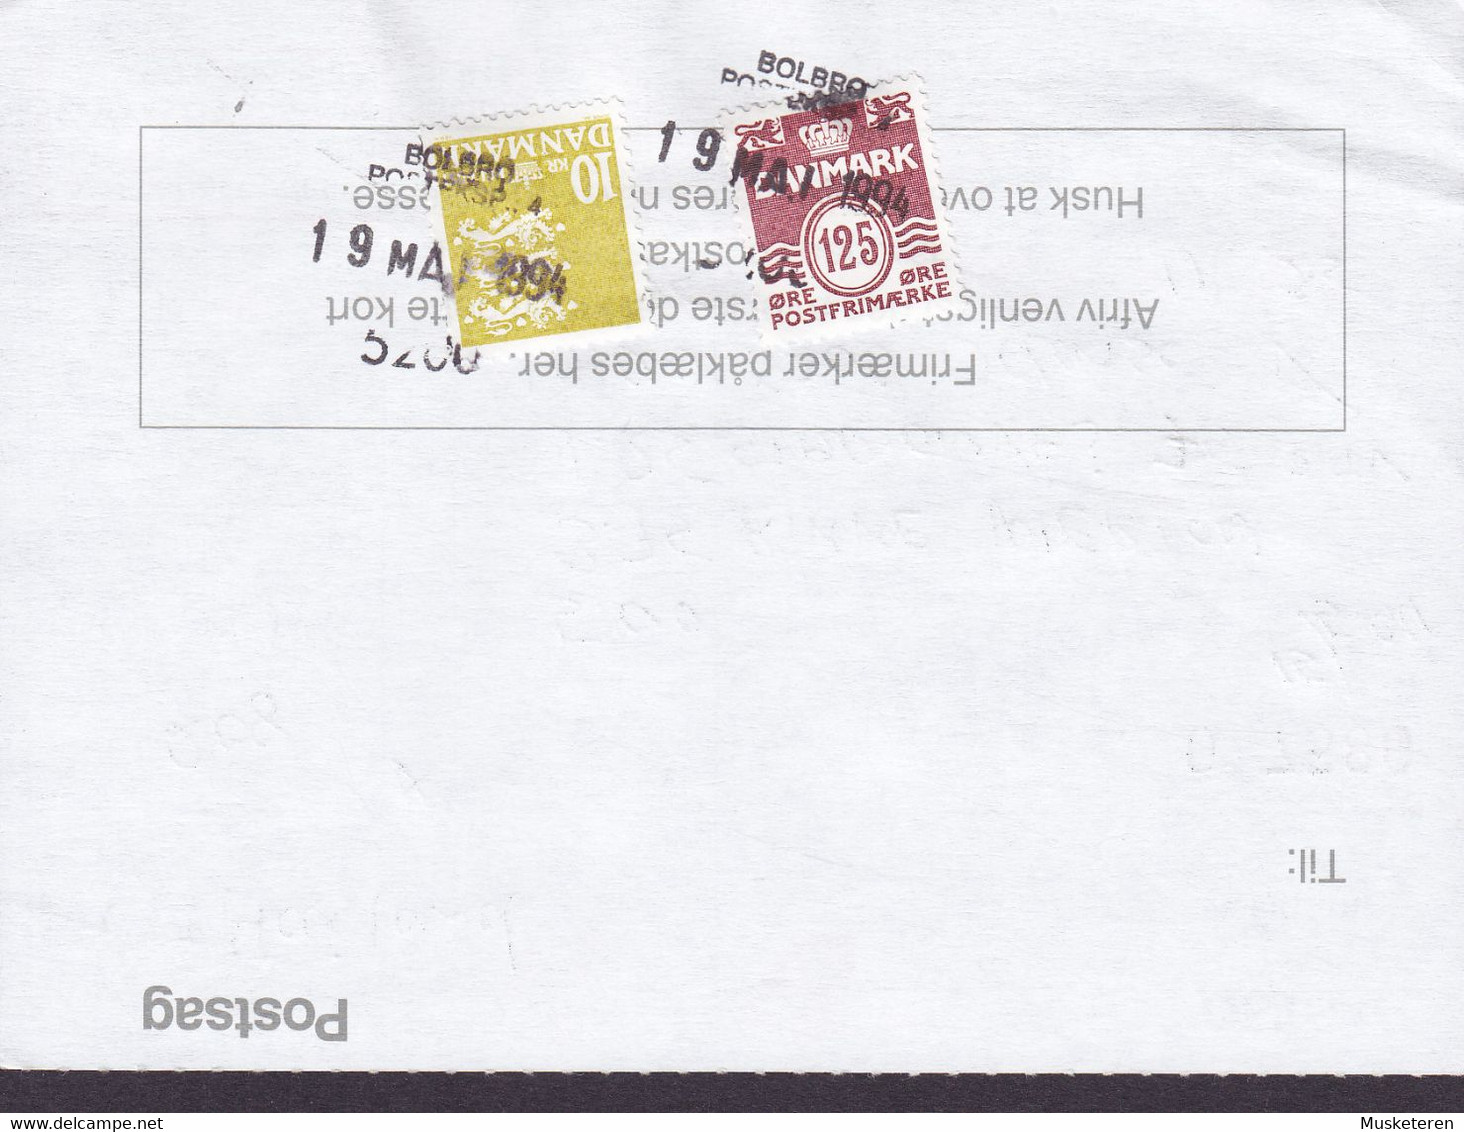 Denmark Regning Manglende Porto Bill TAXE Postage Due Thailand Line Cds. BOLBRO POSTEKSP. 1994 Postsag (2 Scans) - Cartas & Documentos